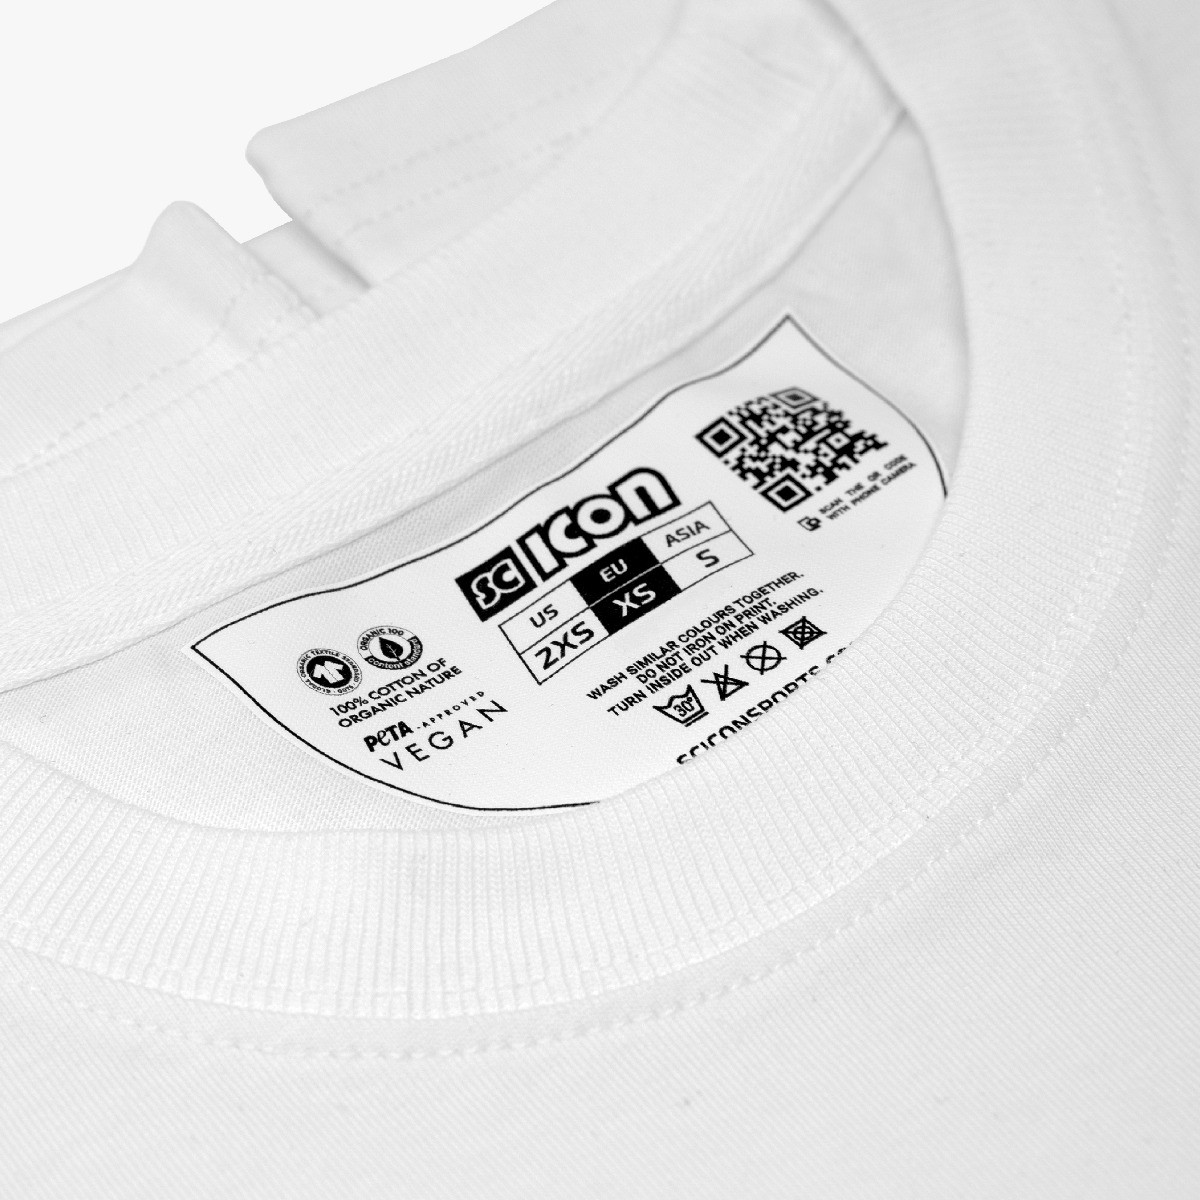 sciconsports t-shirt white ts61881